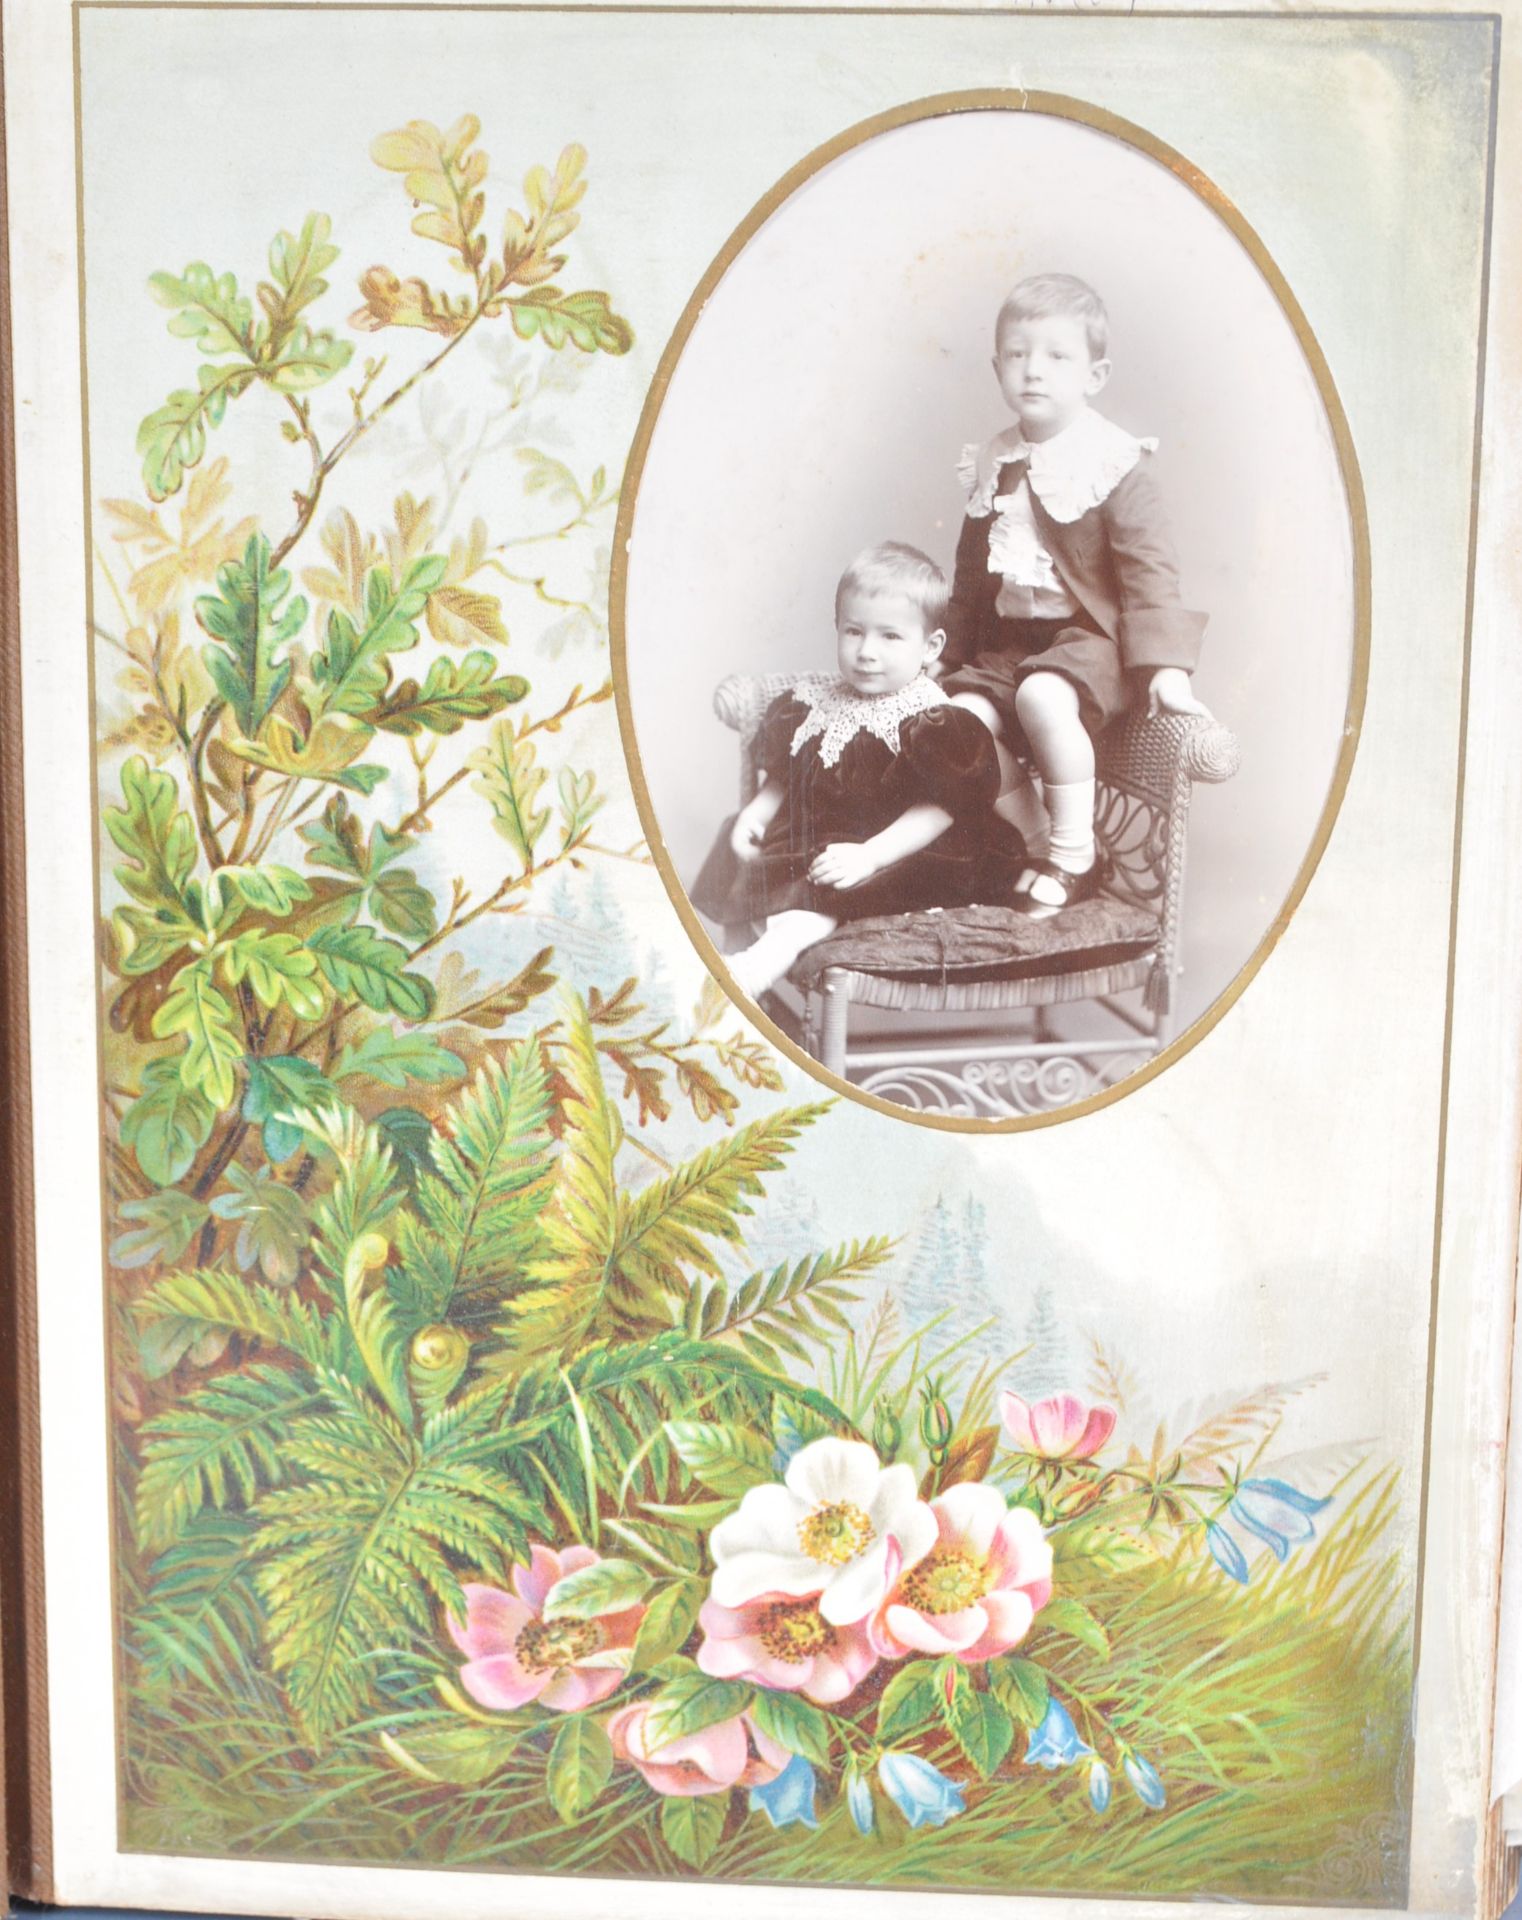 SINGLE FAMILY 19TH CENTURY CDV PHOTOGRAPH ALBUNS - Image 8 of 8